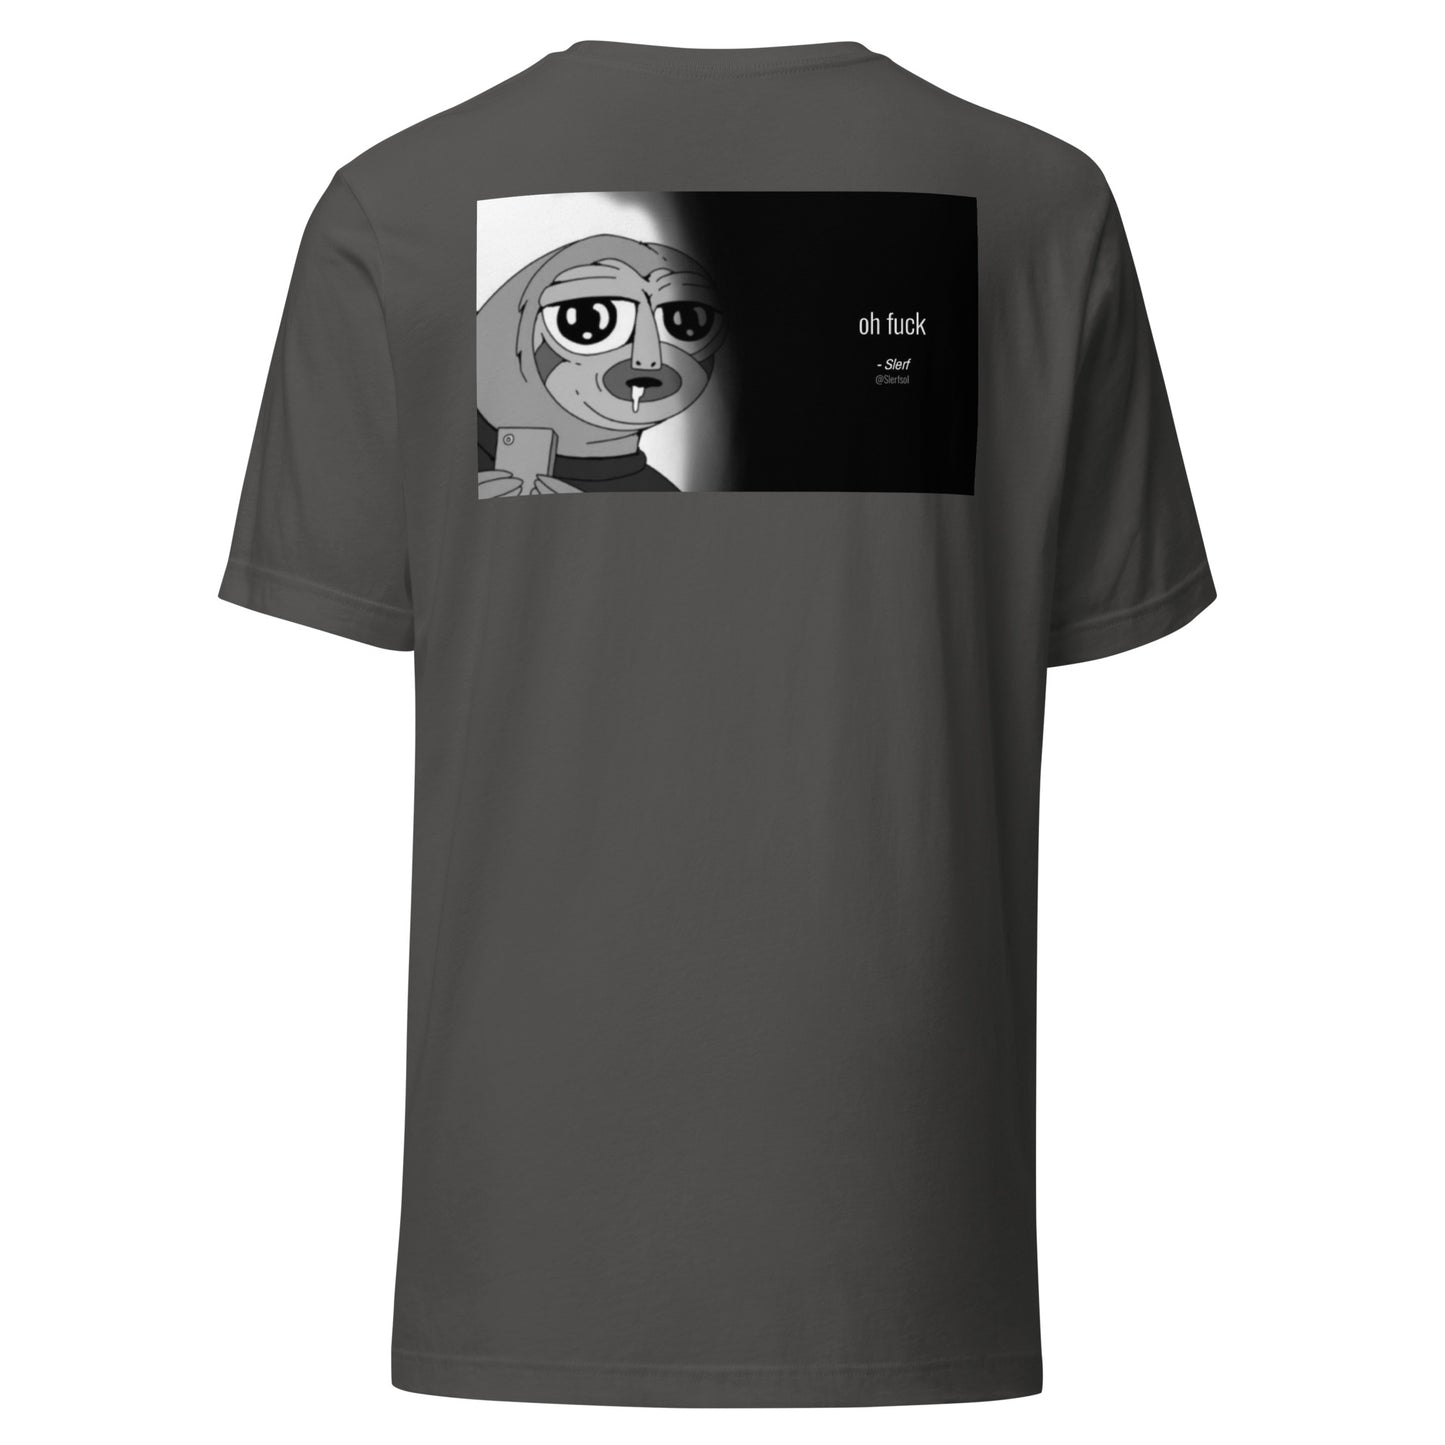 Slerf the Sloth t-shirt